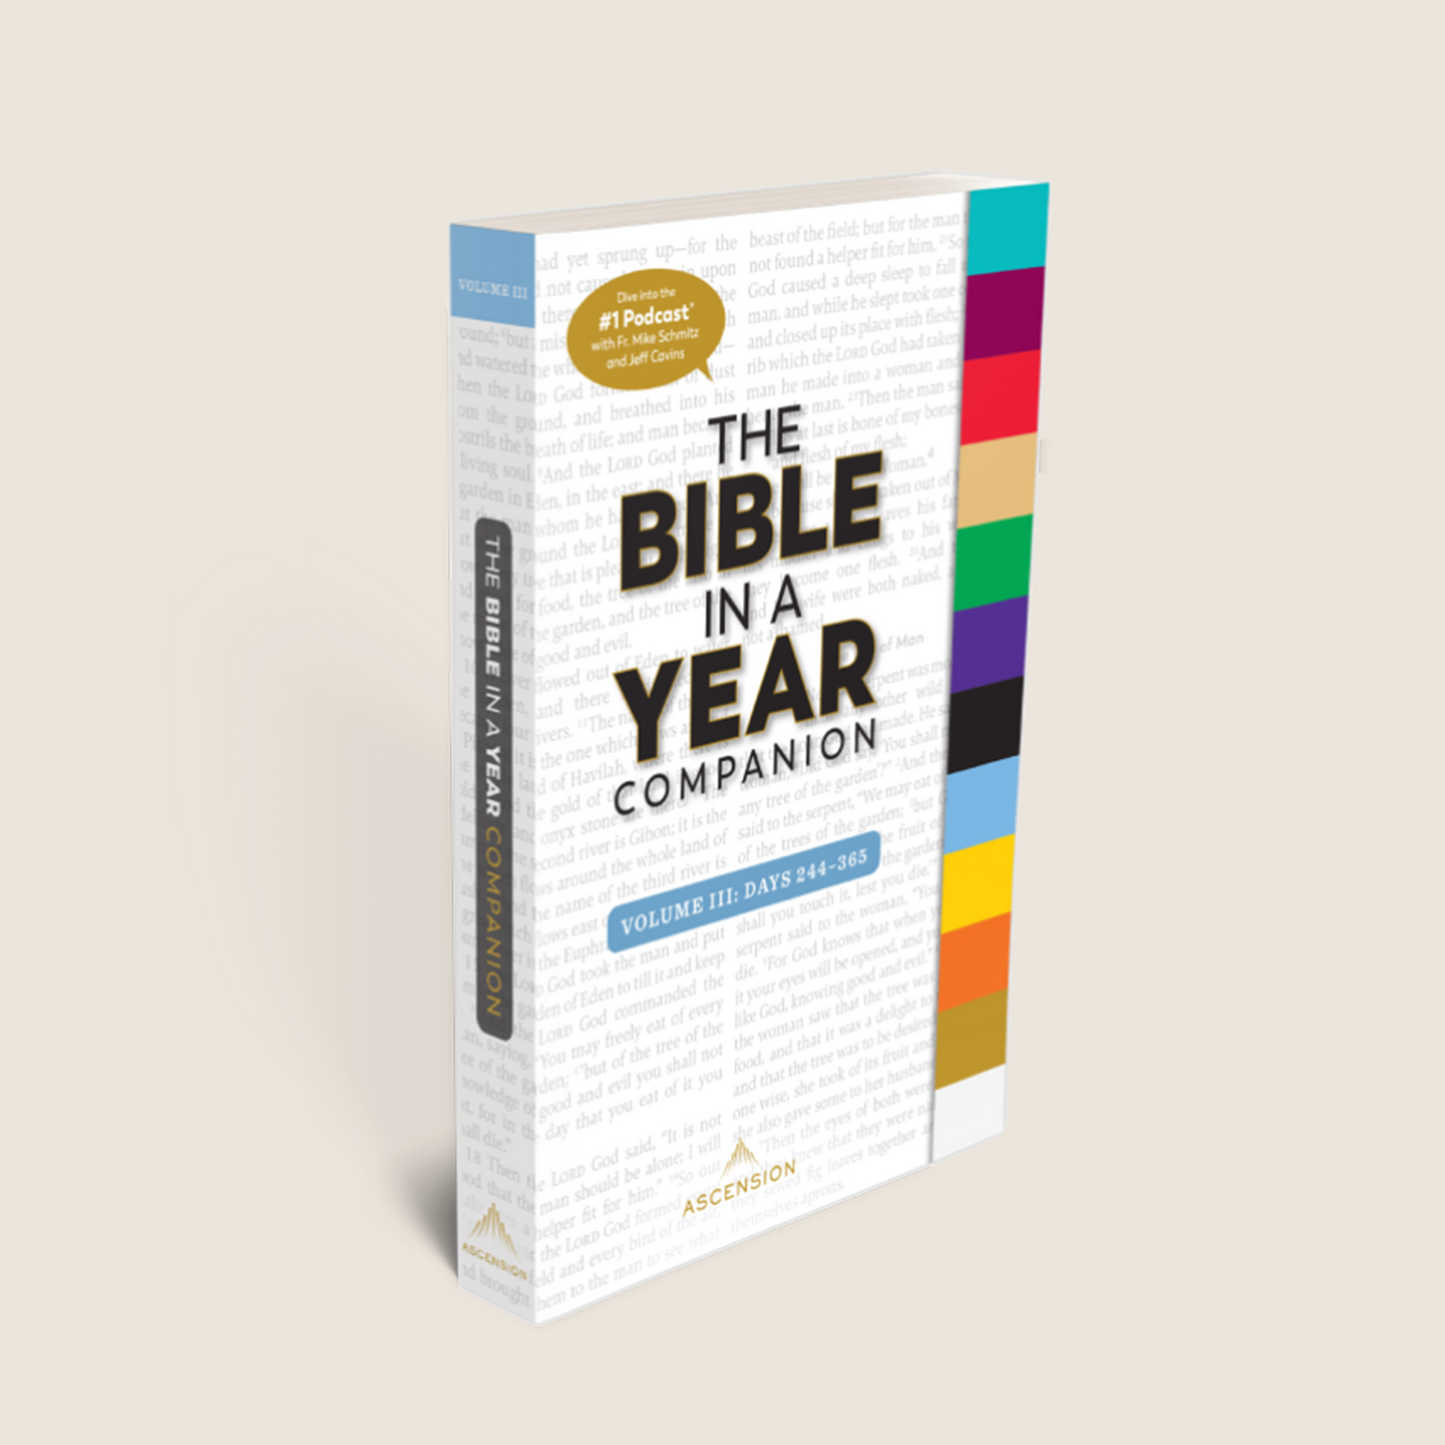 The Bible in a Year Companion, Volume III